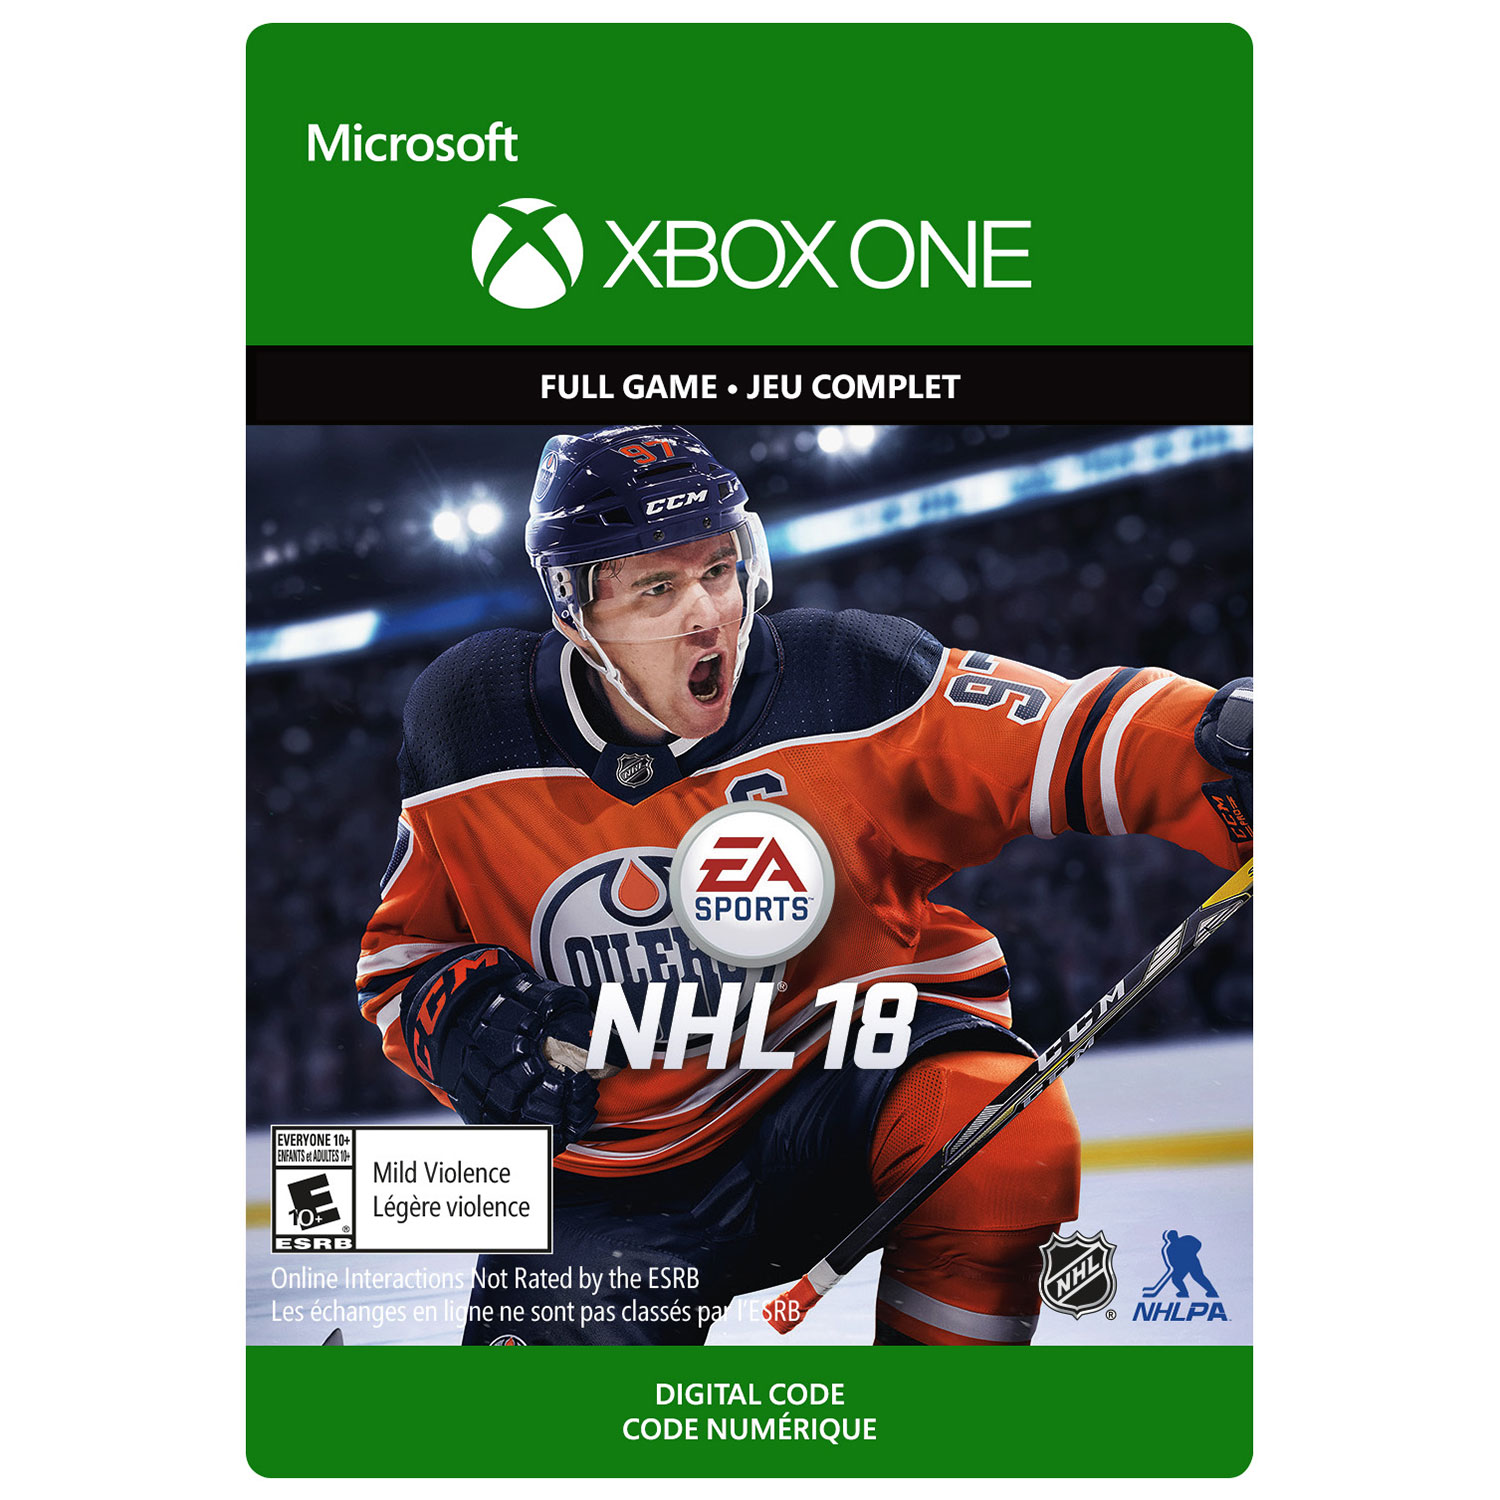 Nintendo switch nhl. NHL Xbox one. NHL 18 Xbox 360. Xbox 360 игры НХЛ 18. NHL 18 Xbox one Cover.